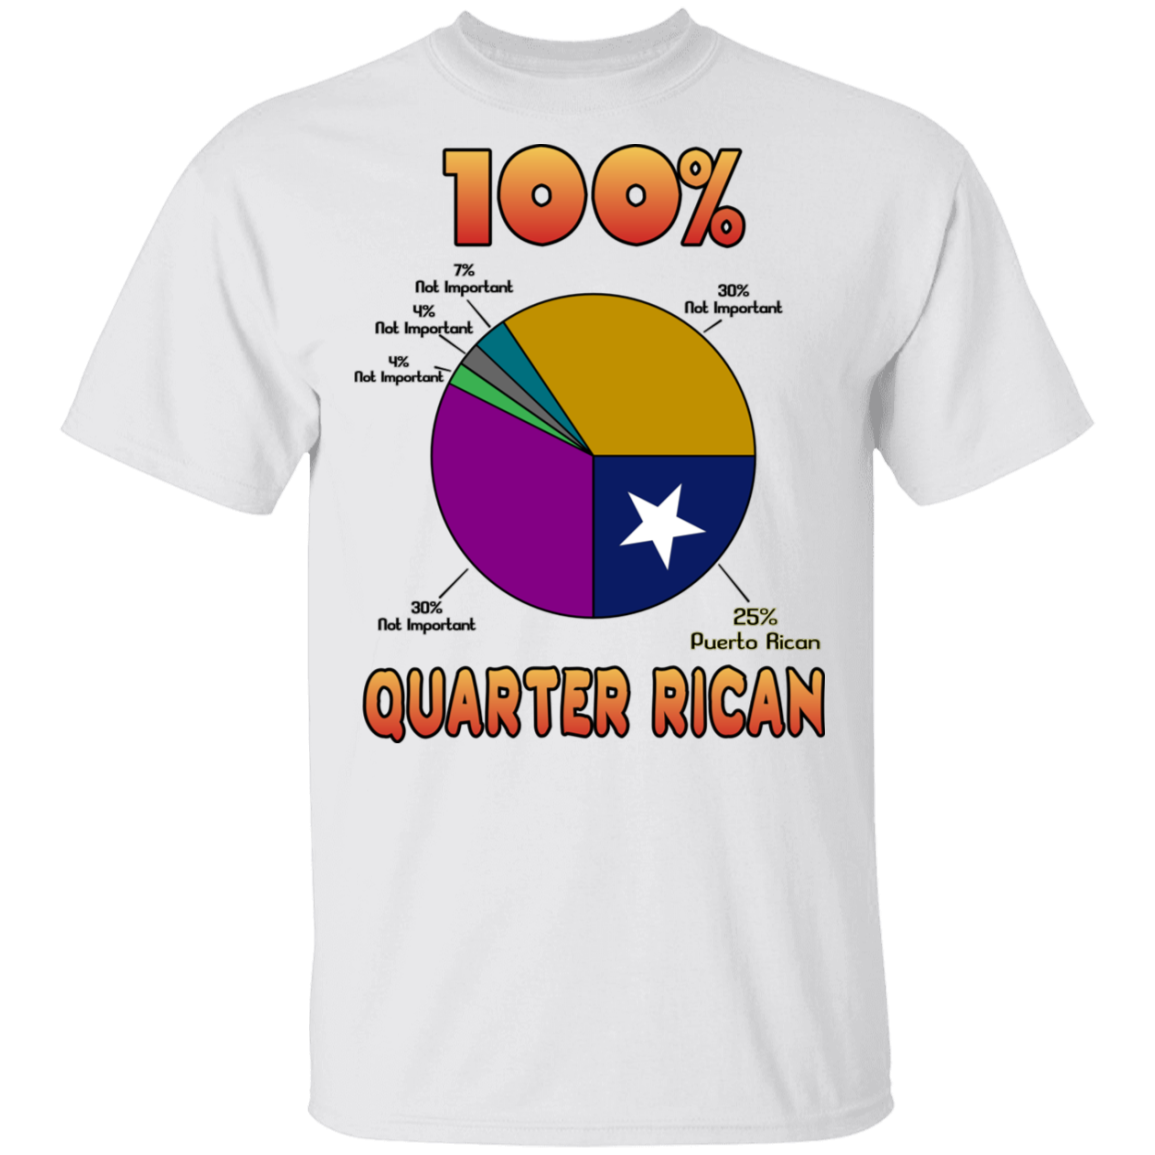 QUARTER RICAN 5.3 oz. T-Shirt - Puerto Rican Pride